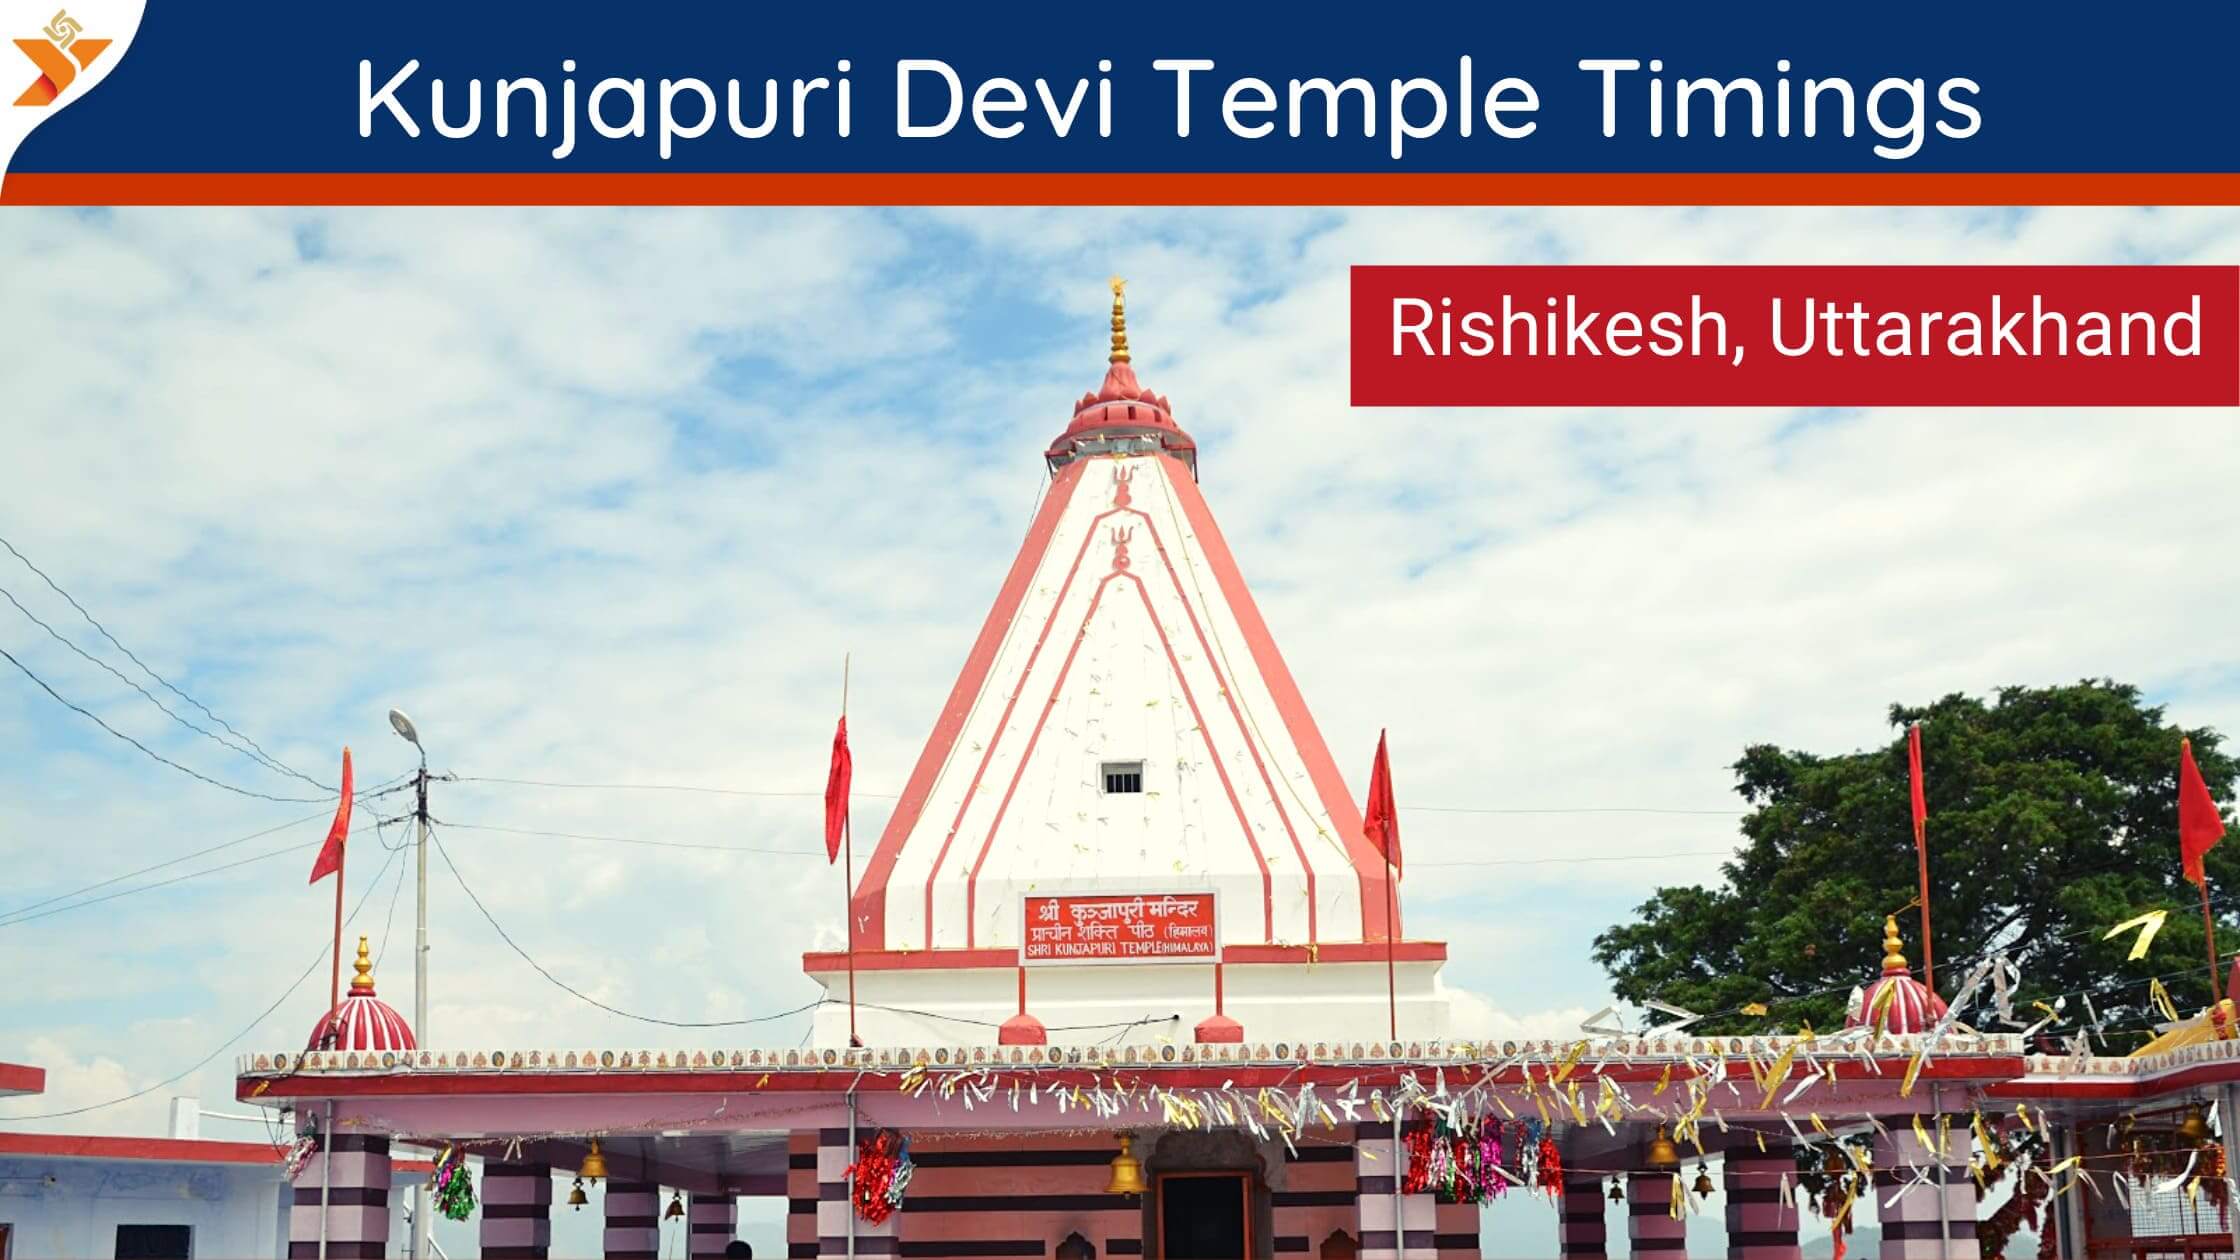 kunjapuri devi temple timings (1)